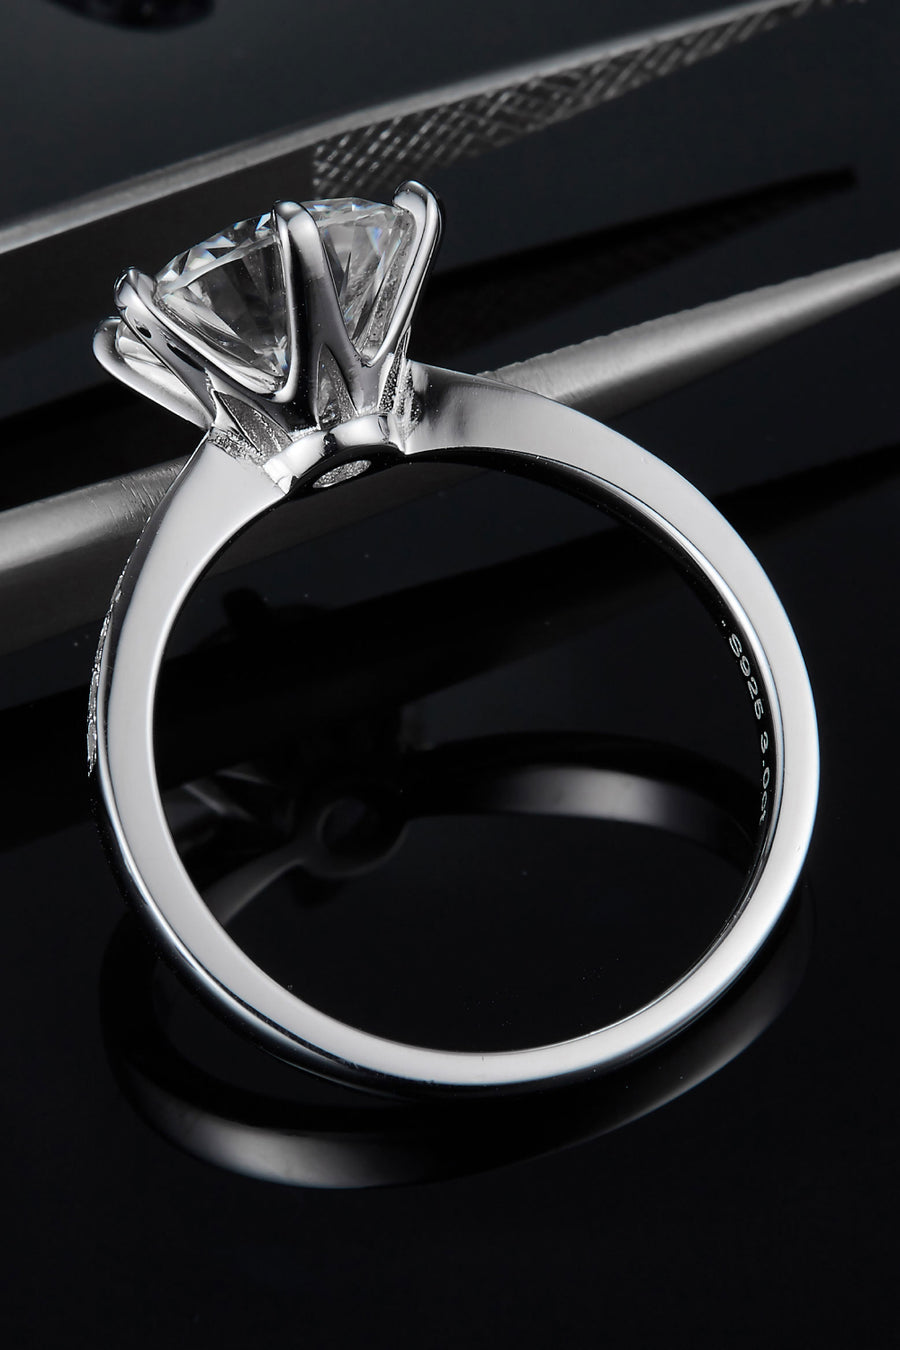 3 Carat Moissanite Ring, Moissanite Side Stone Ring, 3 Carat Engagement Ring, Lab-Created Diamond Alternative, Sparkling Moissanite Jewelry, Affordable Luxury Ring, Elegant Moissanite Design, Brilliant Side Stone Ring, Stunning Moissanite Centerpiece, Timeless Moissanite Engagement Ring.